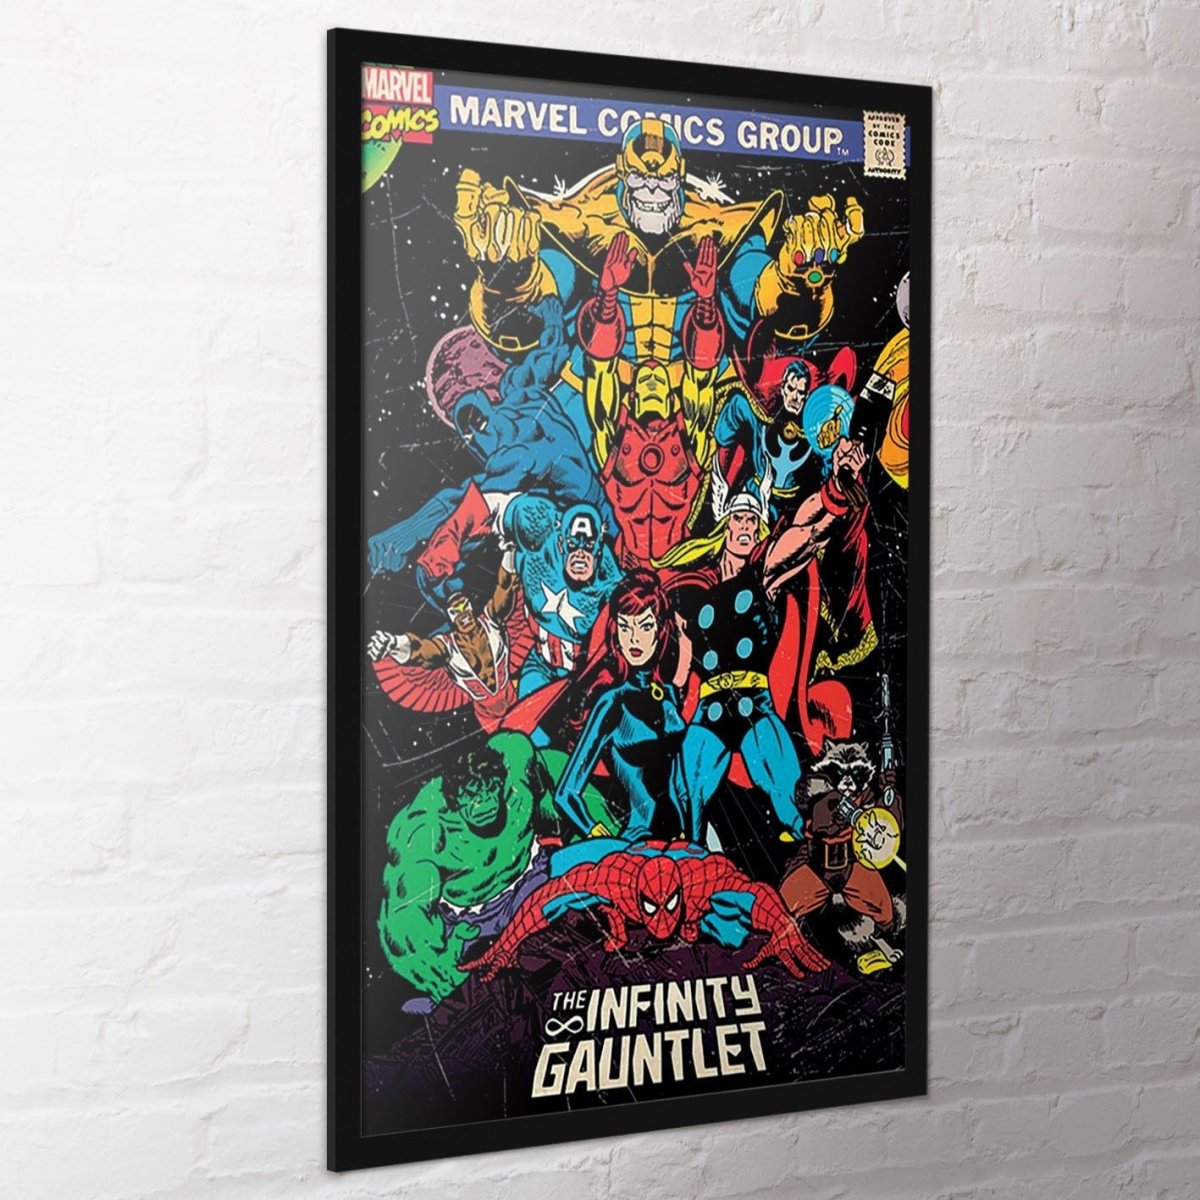 Marvel Comics (The Infinity Gauntlet) 61 X 91.5cm Maxi Poster - Inspire Newquay